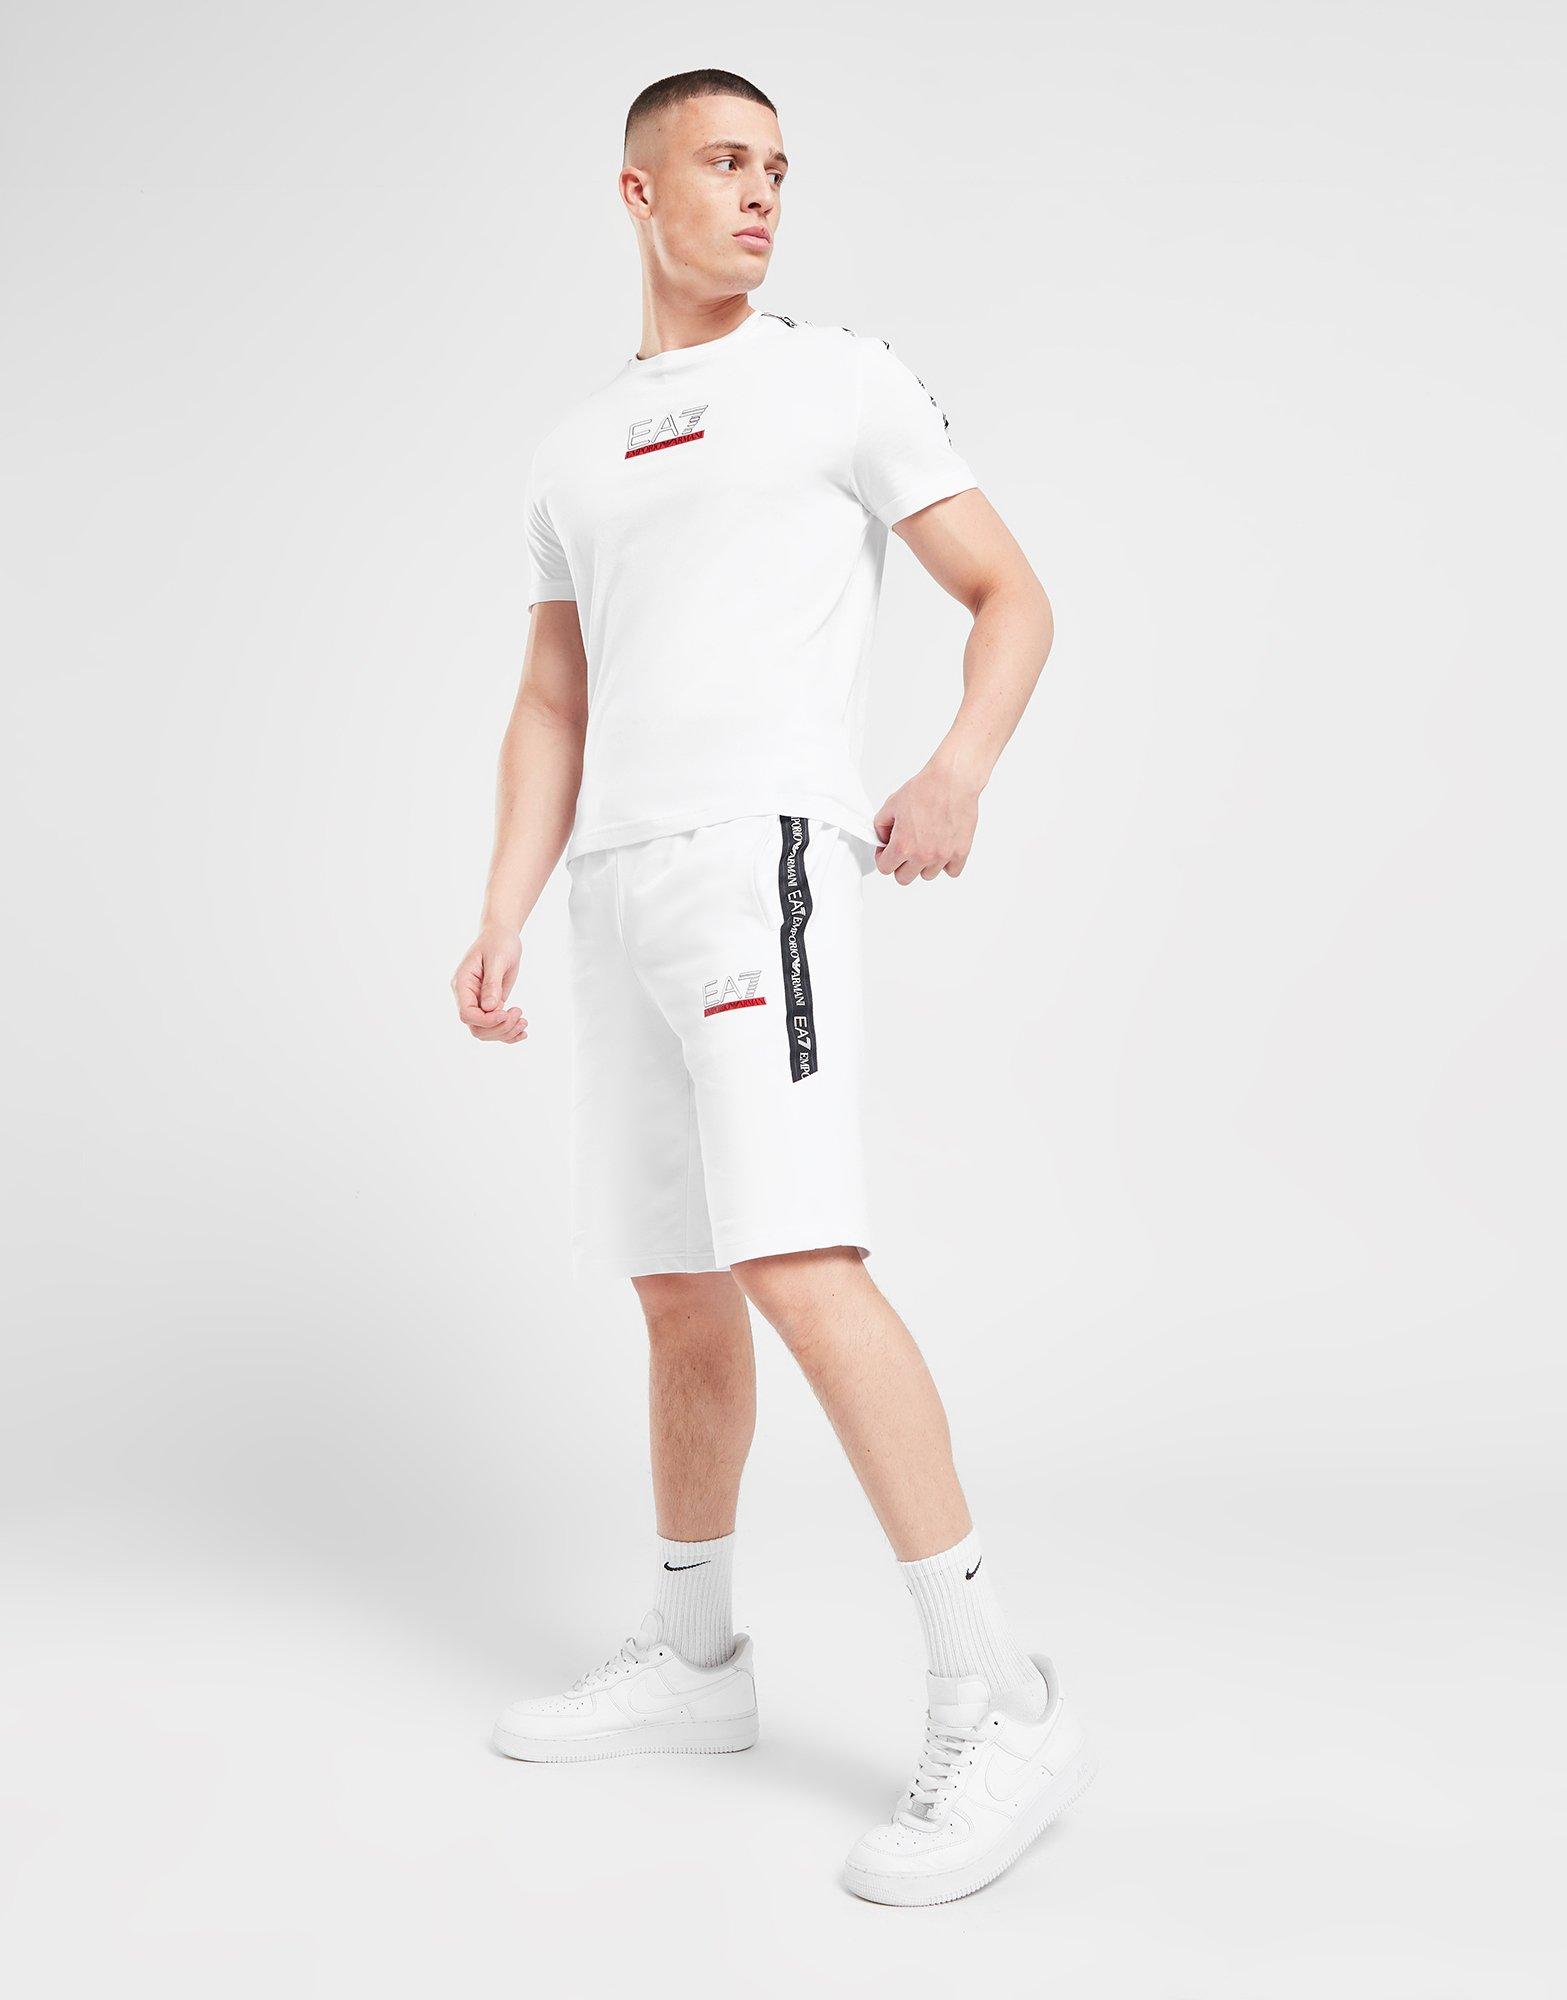 White Emporio Armani Tape Shorts | Sports